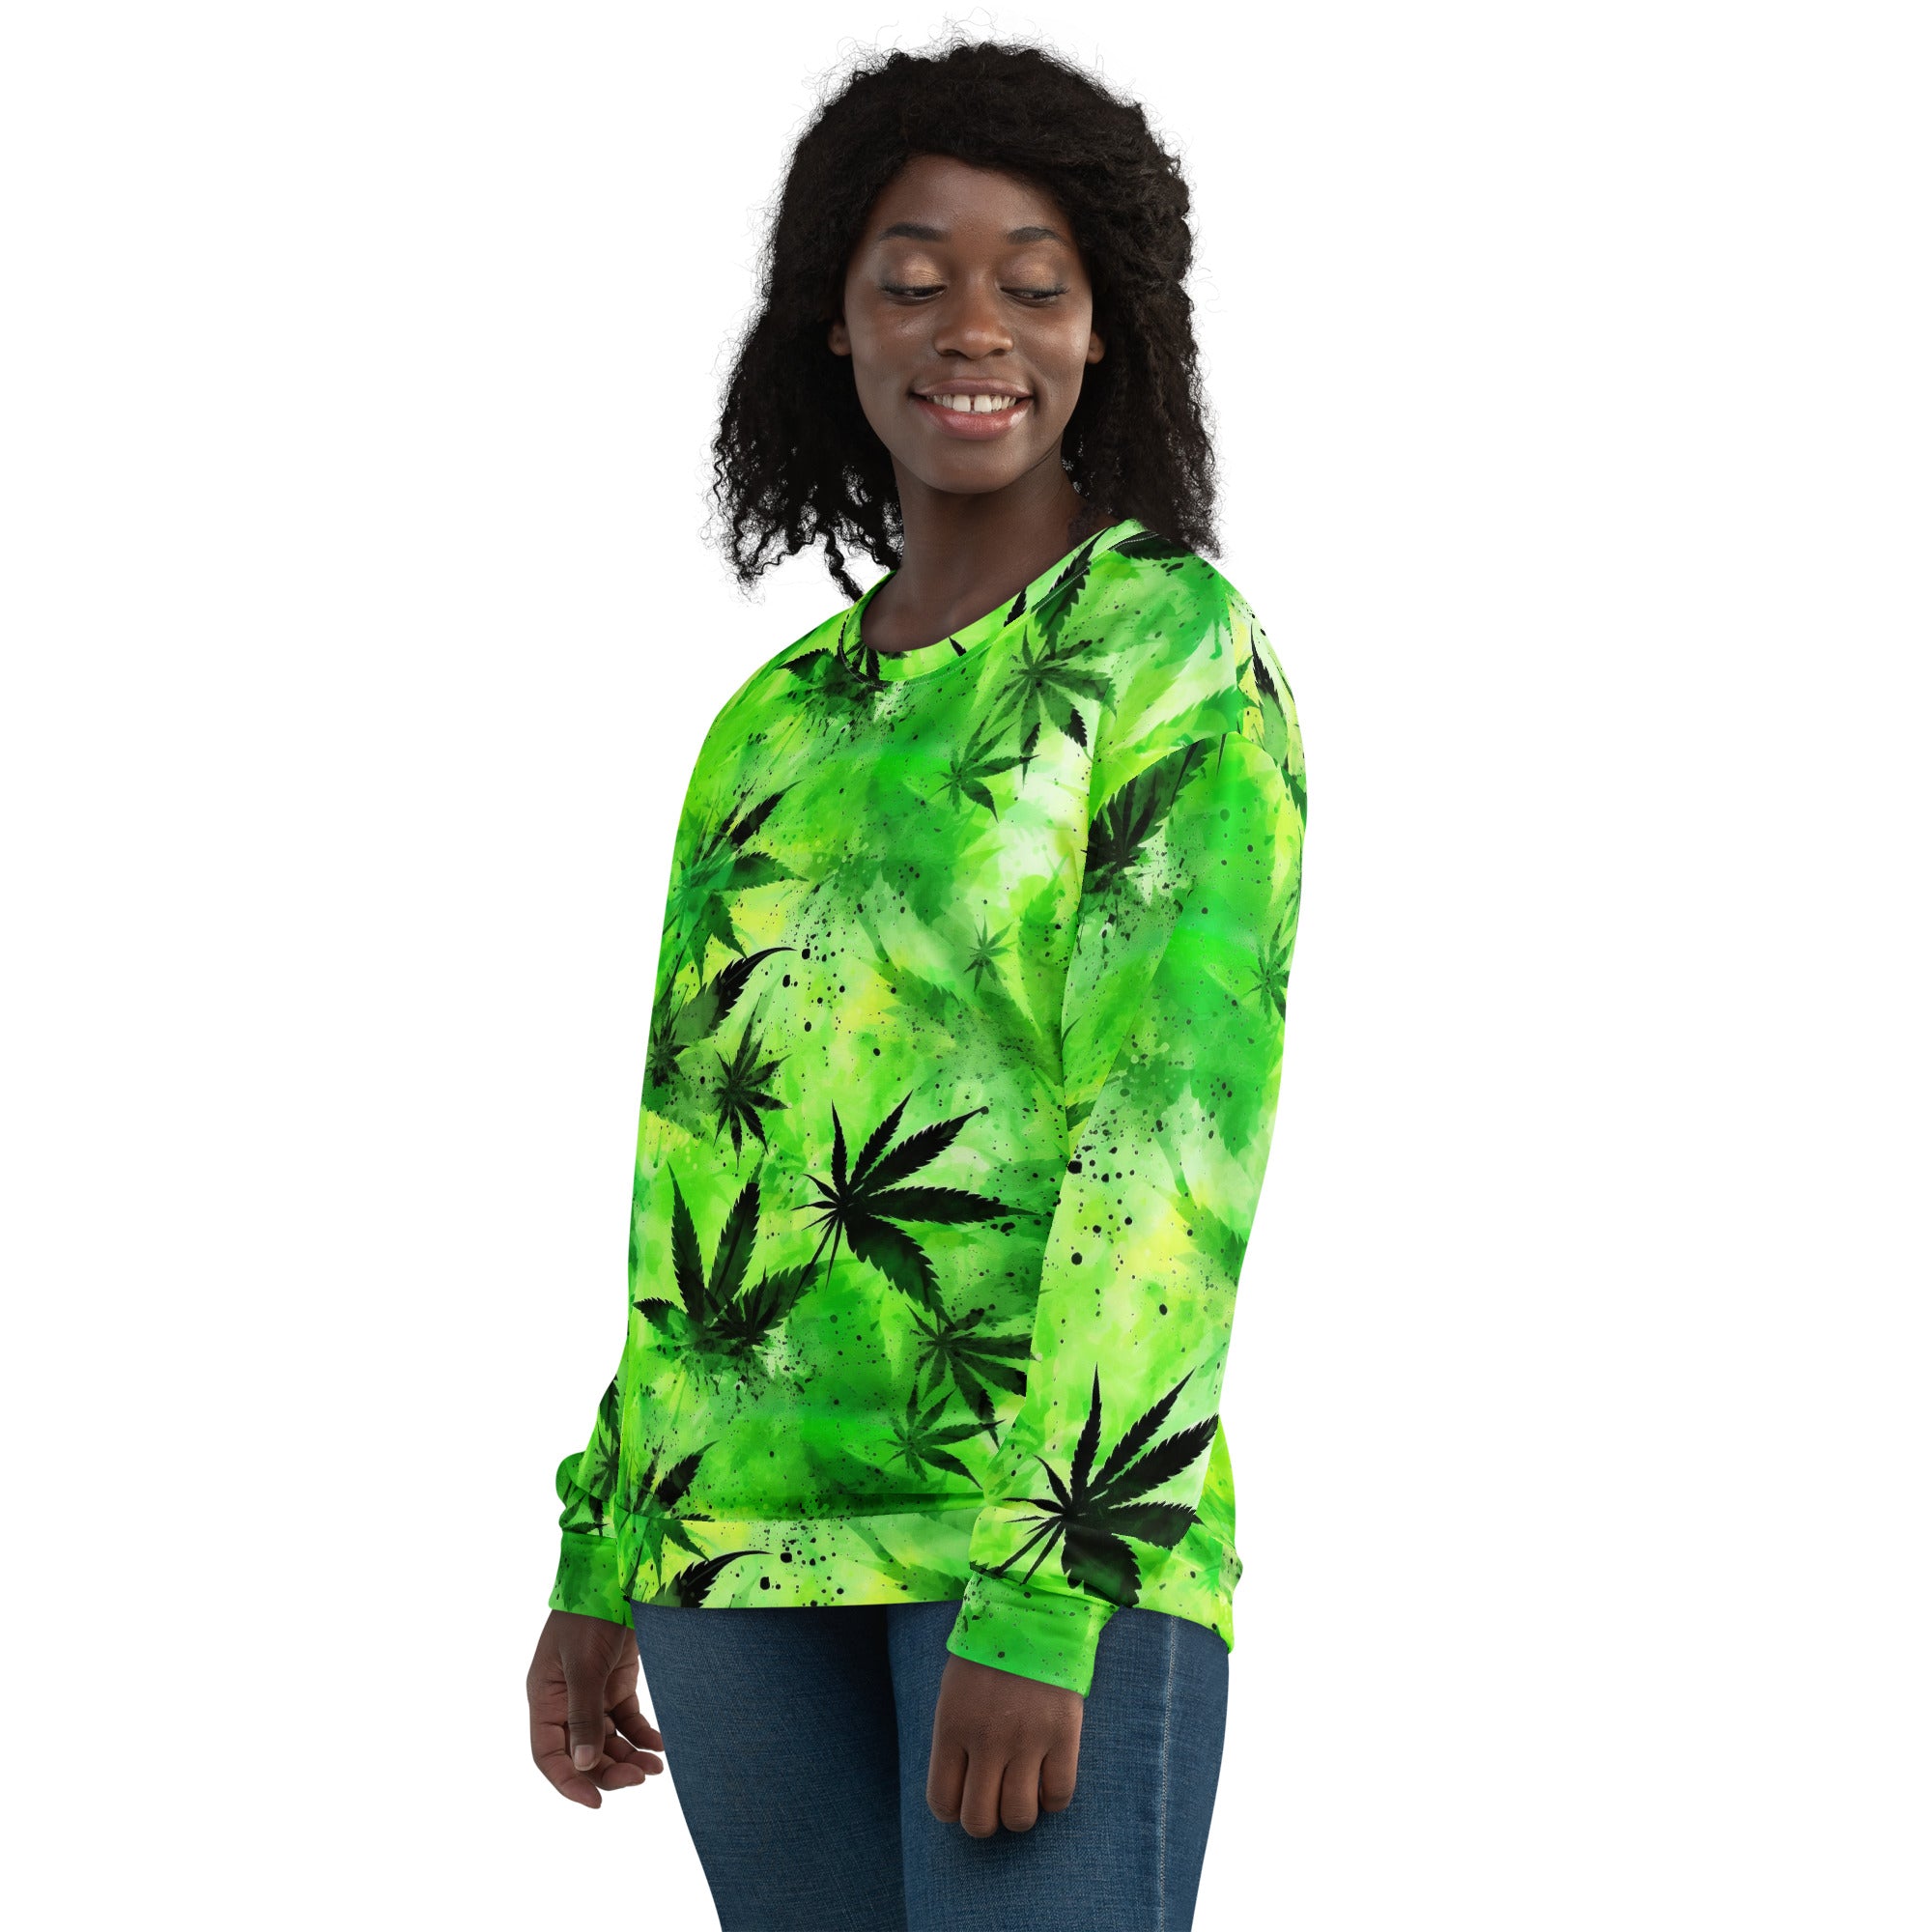 Verdant Vibes: Intense Green Floral Allover Print Unisex Pullover - Bold & Cannabis-Inspired, SenStoner Collection